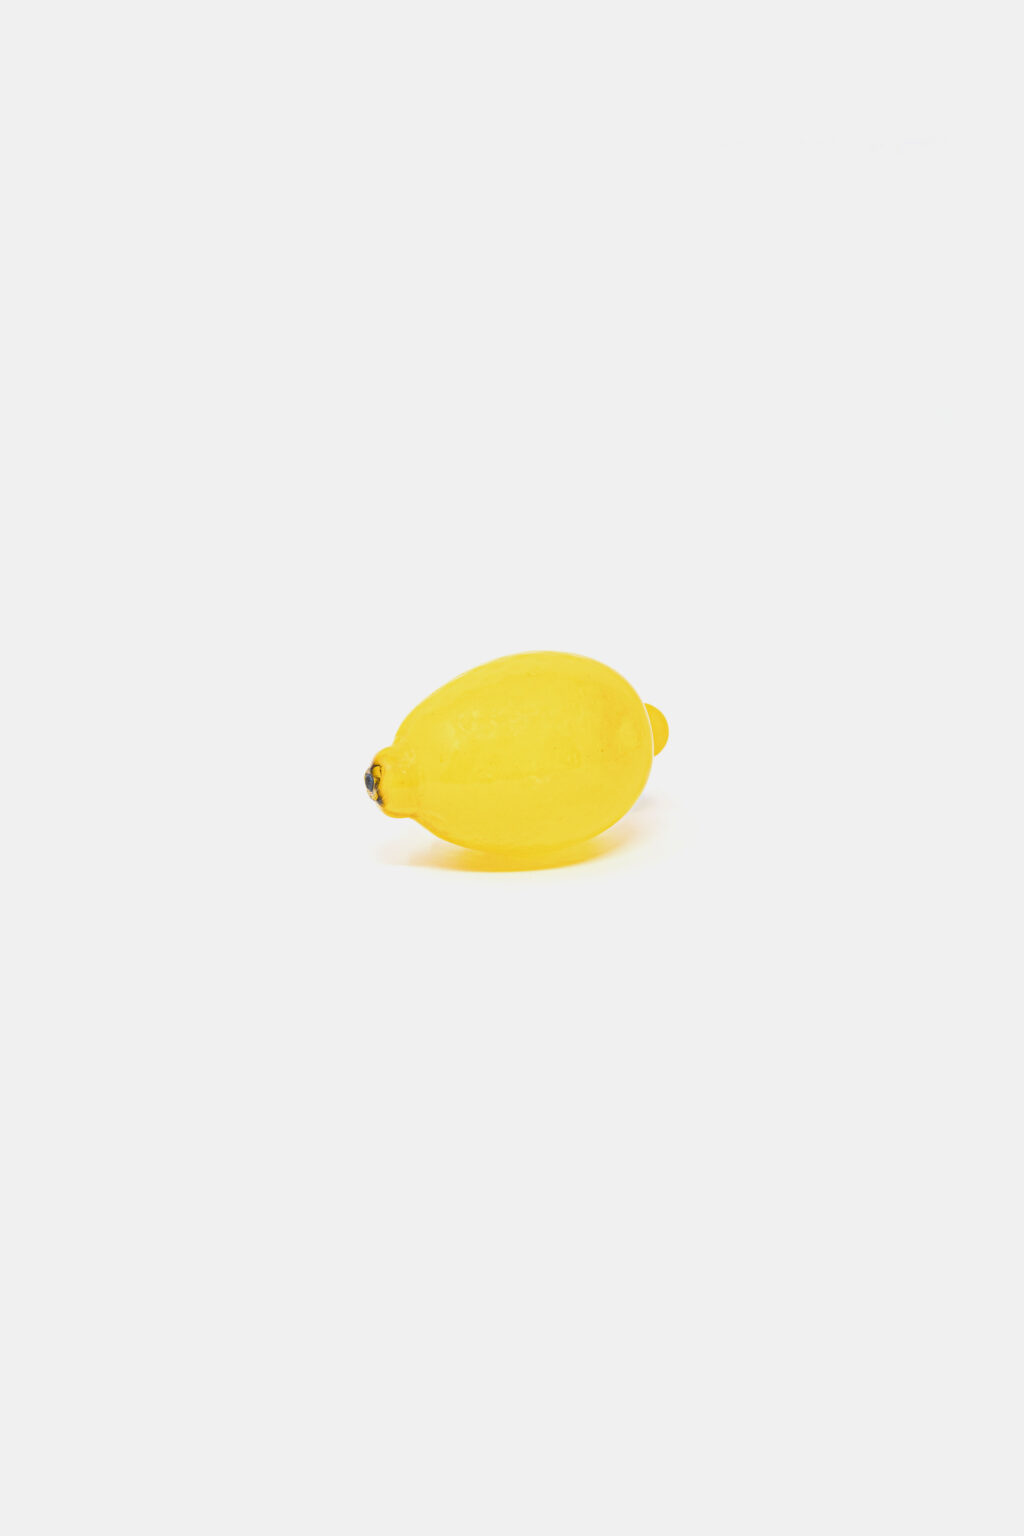 Gunilla Kihlgren - Handblown glass - Lemon